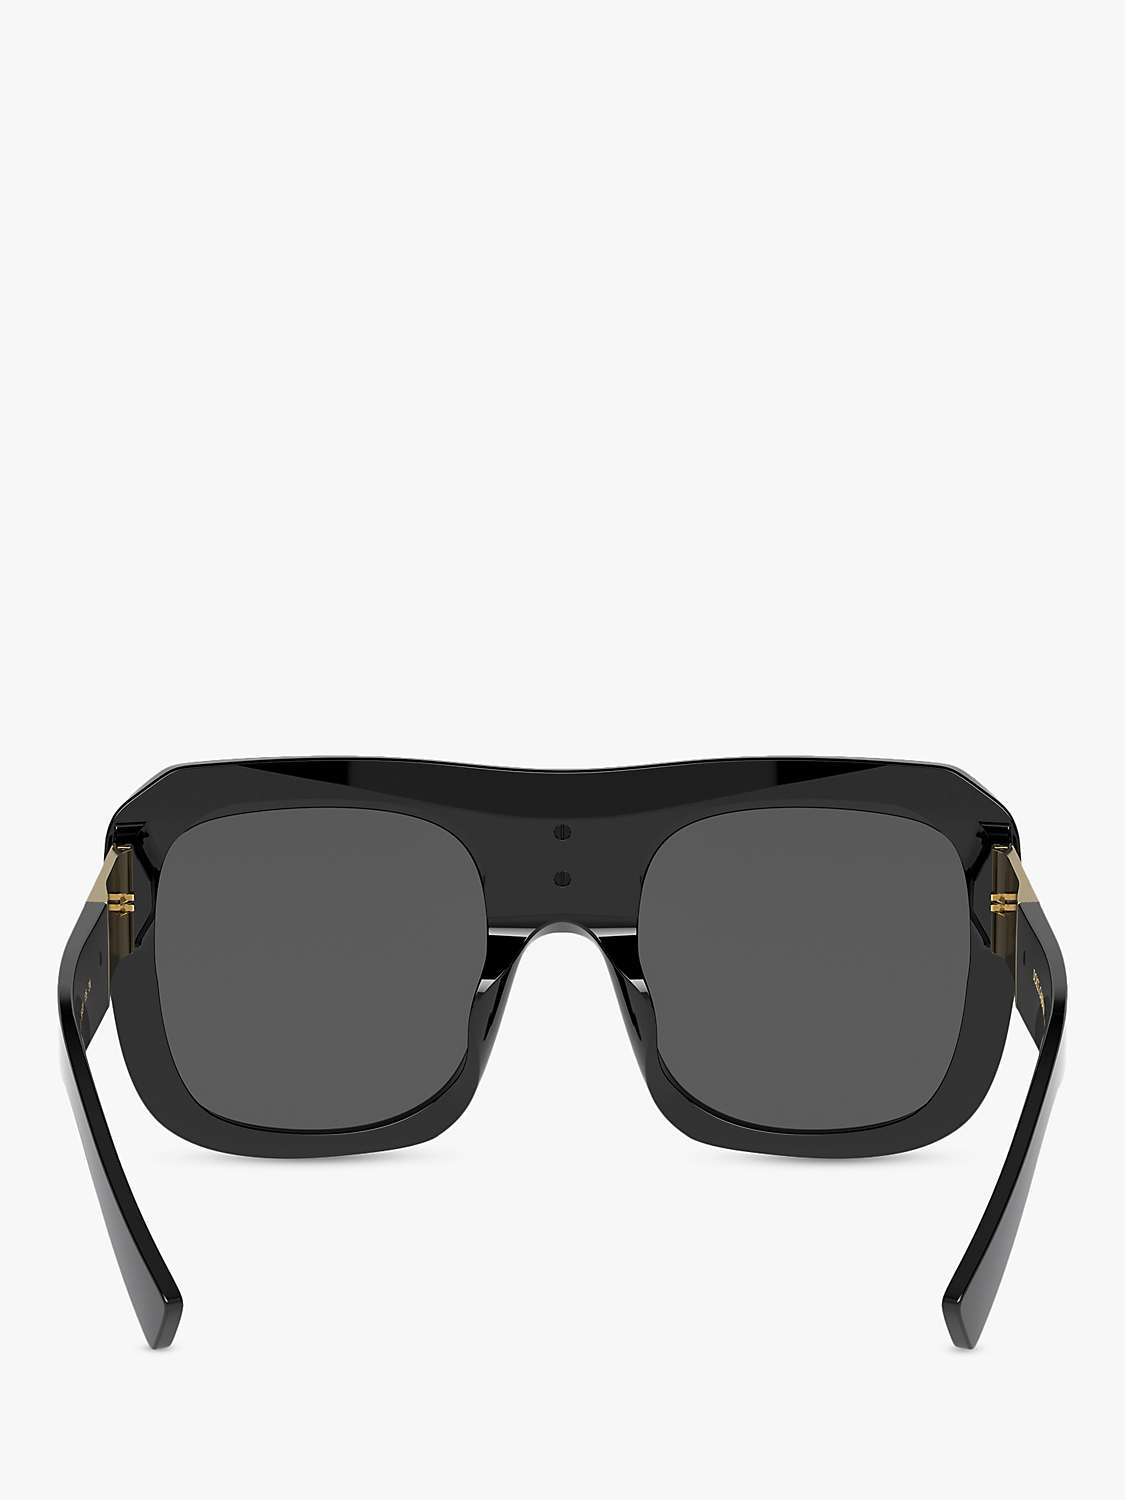 Buy Dolce & Gabbana DG4397 Women's Chunky Square Sunglasses, Black/Grey Online at johnlewis.com